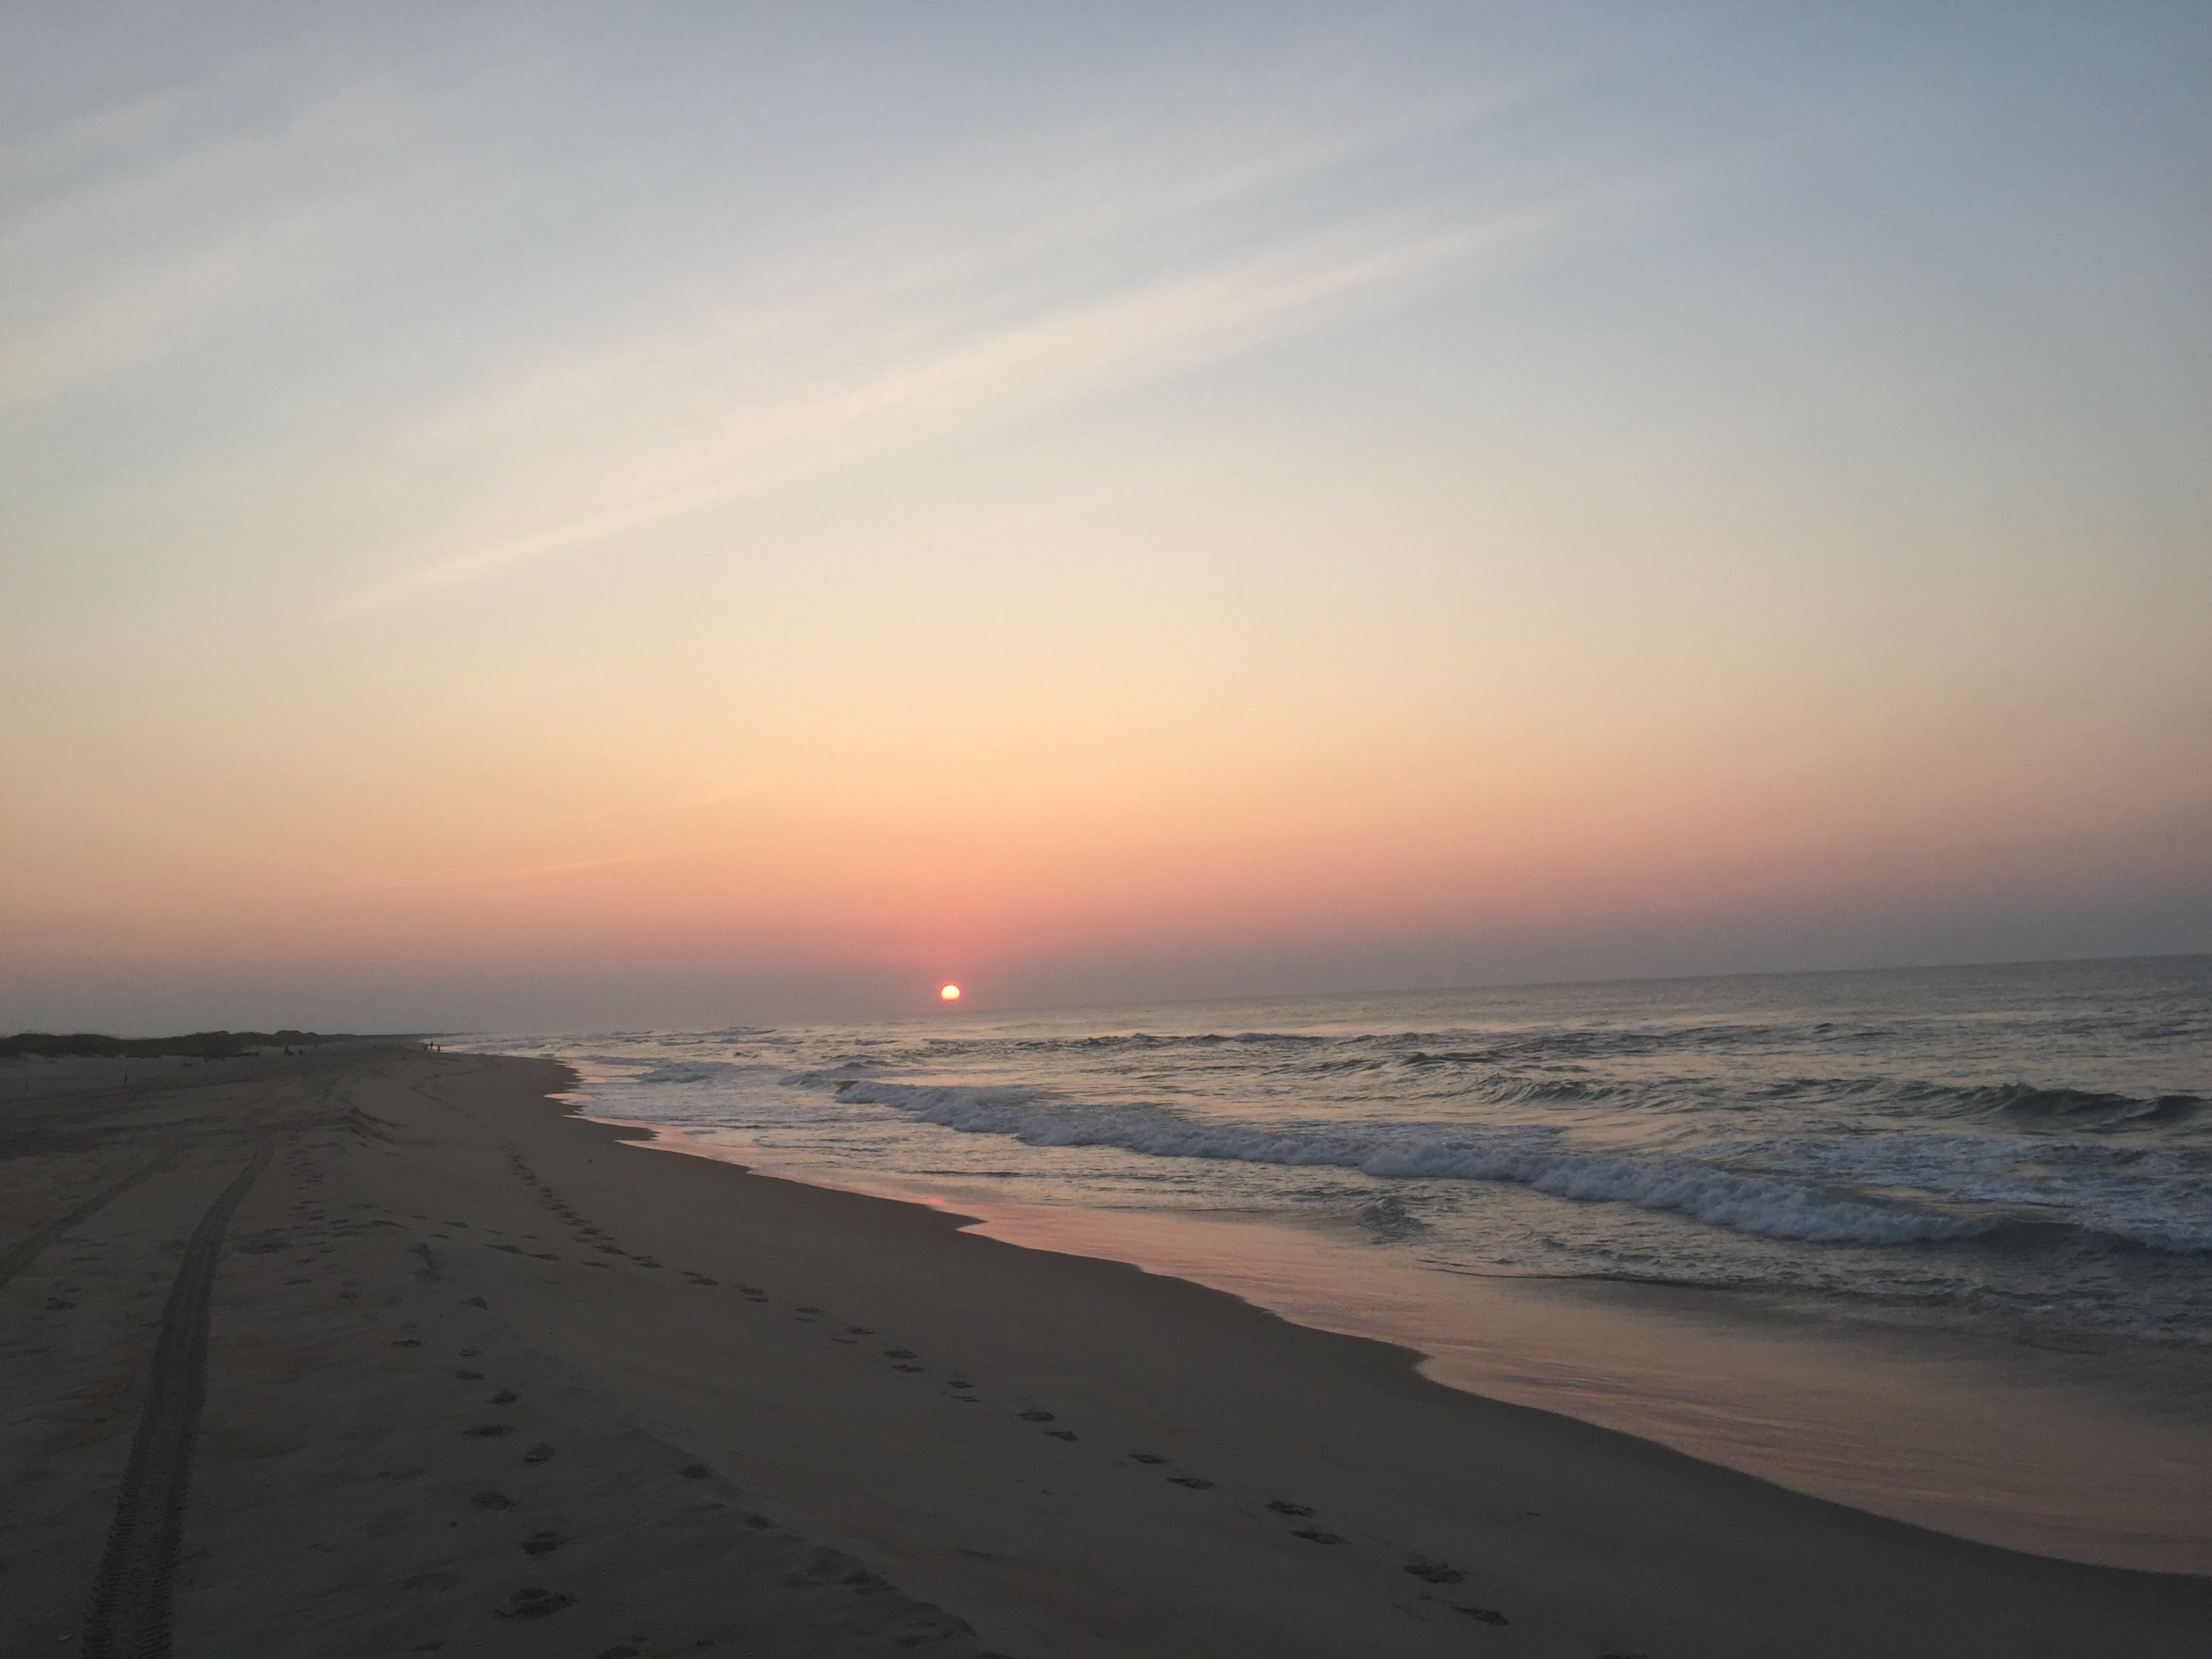 Sunrise view from Ocracoke Island.